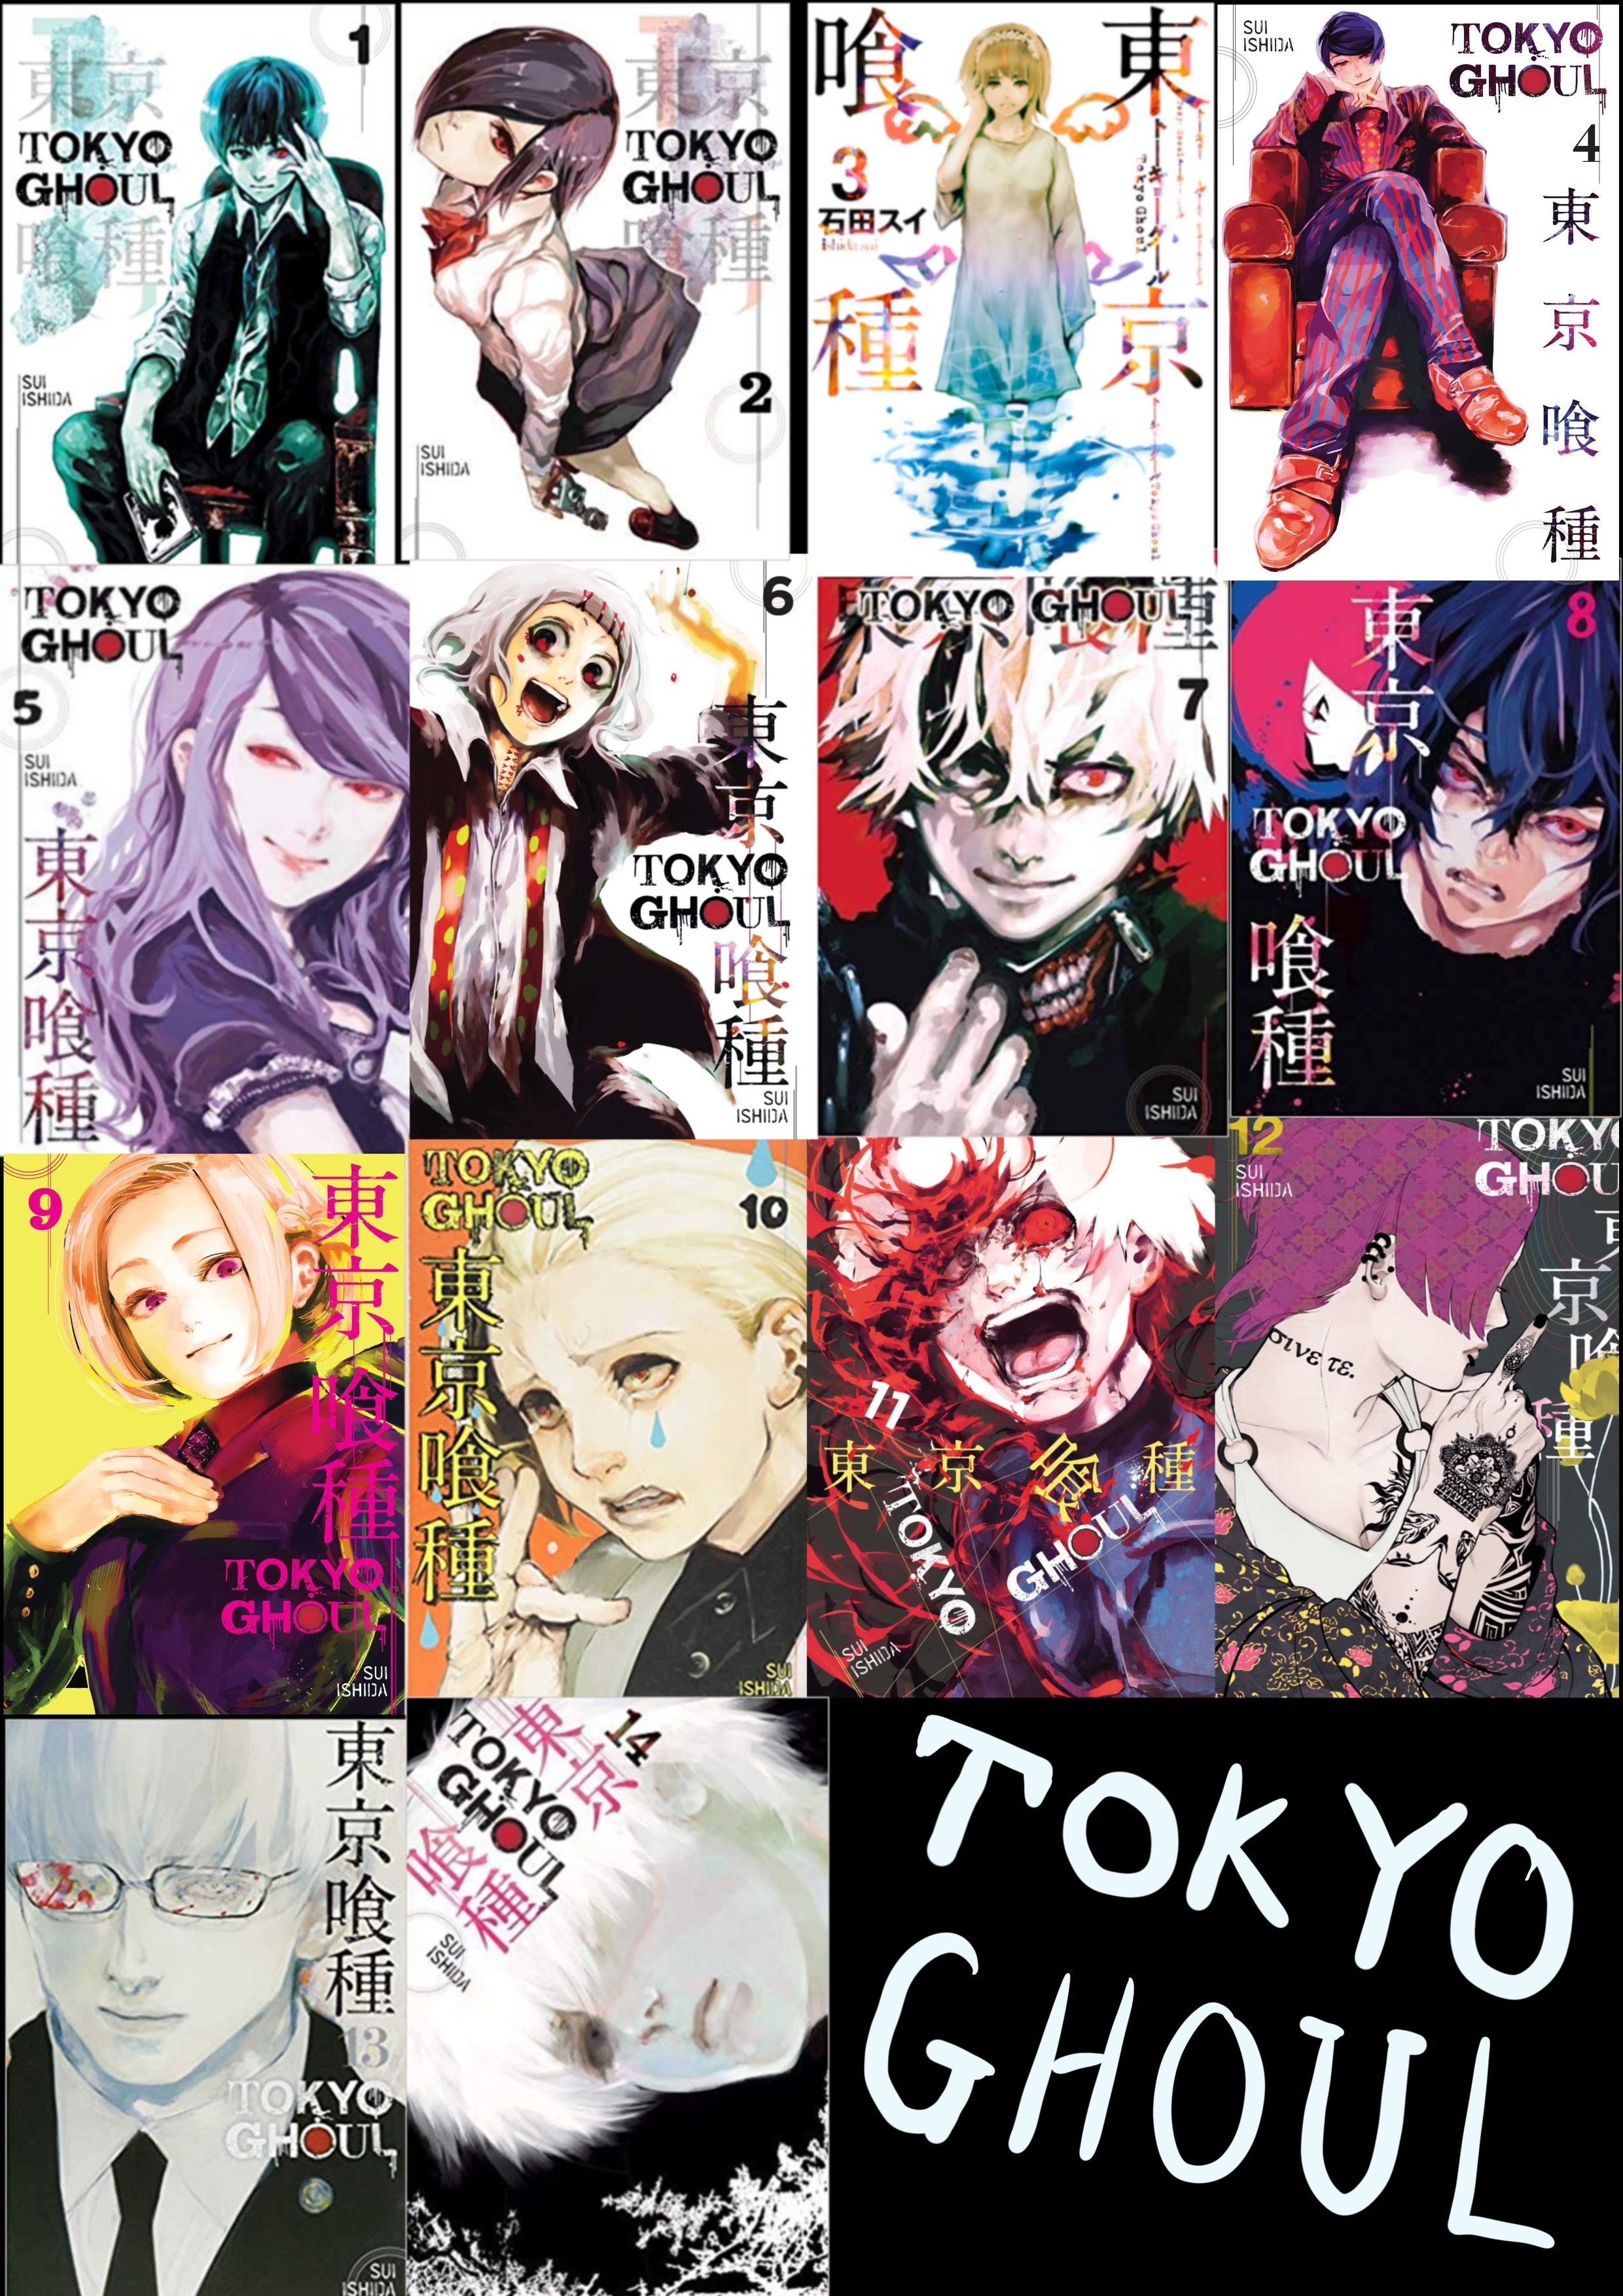 Tokyo Ghoul Manga Cover Wallpapers